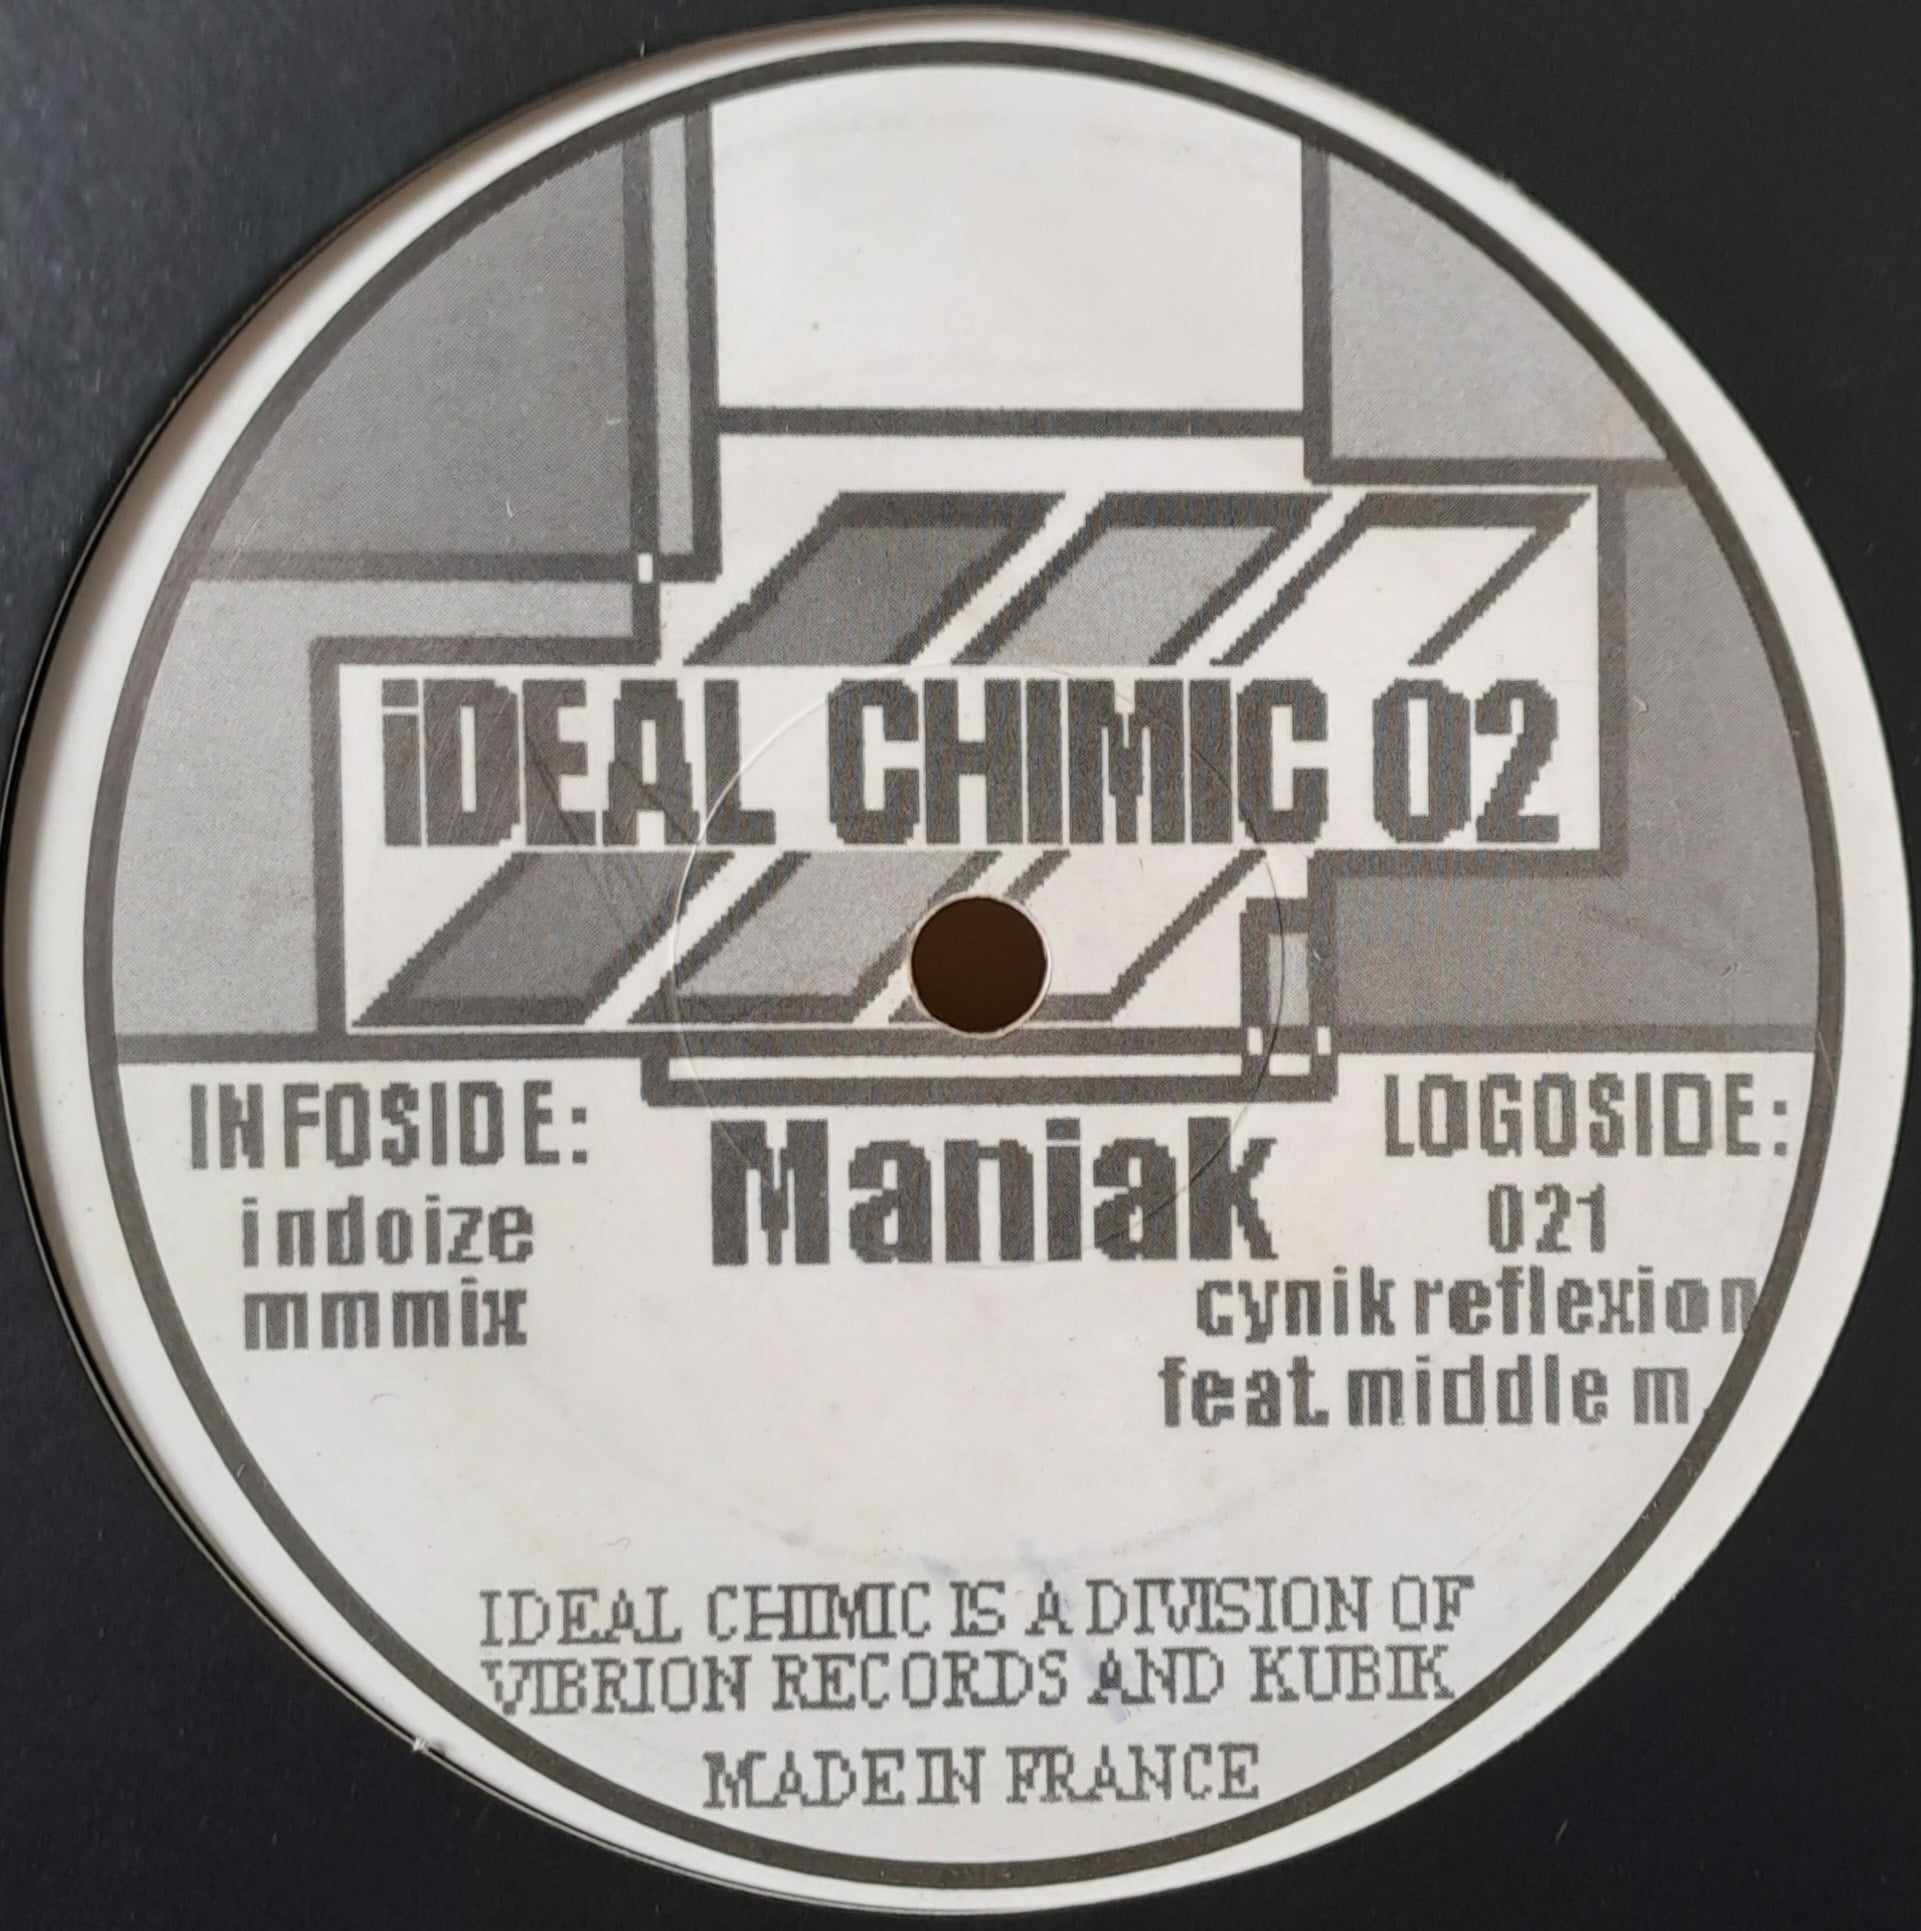 Ideal Chimic 02 - vinyle hardcore